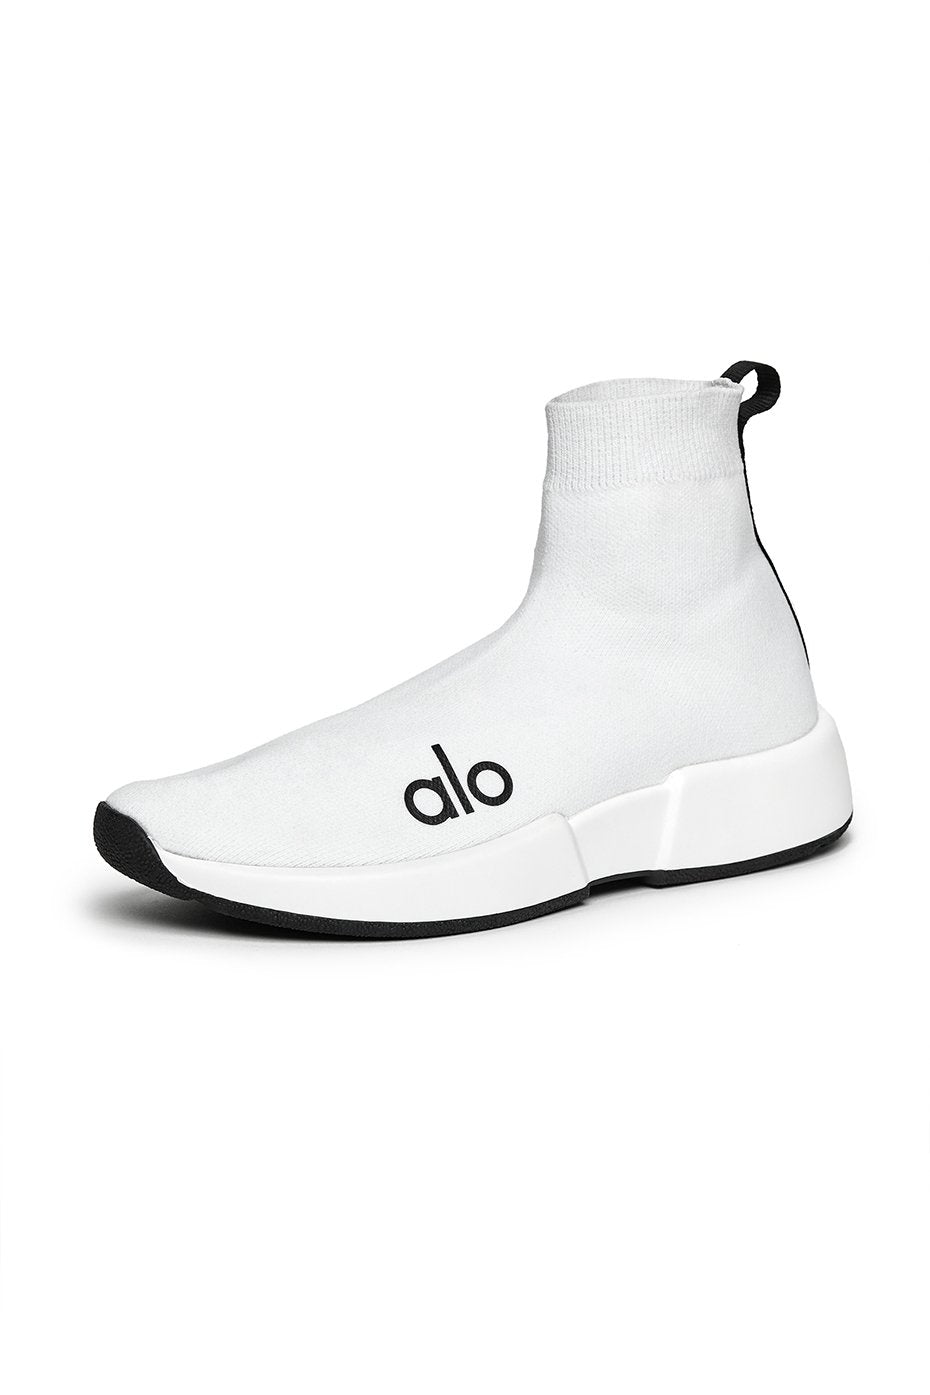 ALO Yoga, Shoes, Alo Yoga Knit Sneaker In Bonewhite Gently Worn As Is